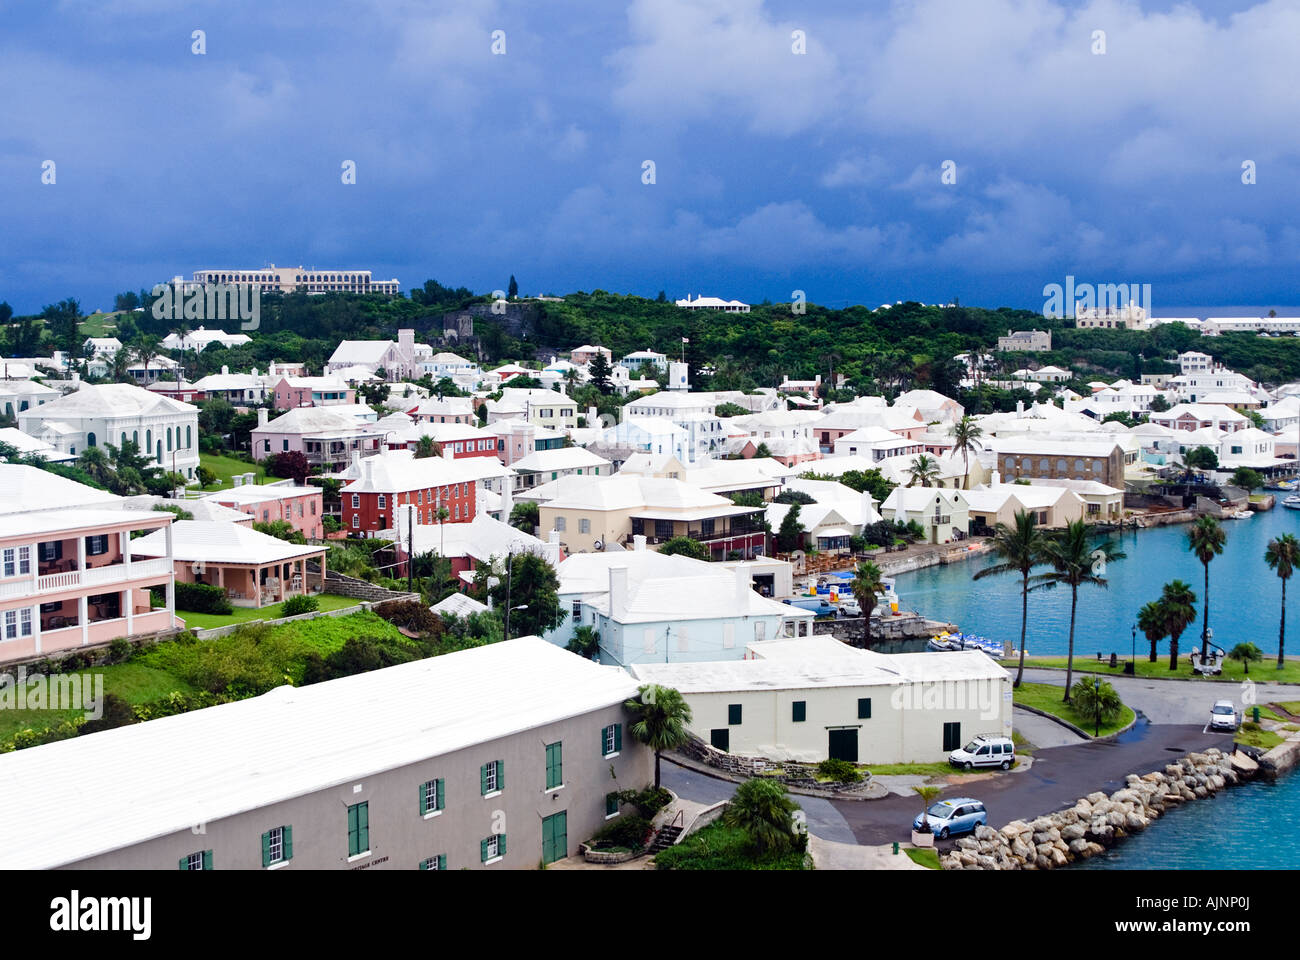 Town of St George Bermuda Stock Photo